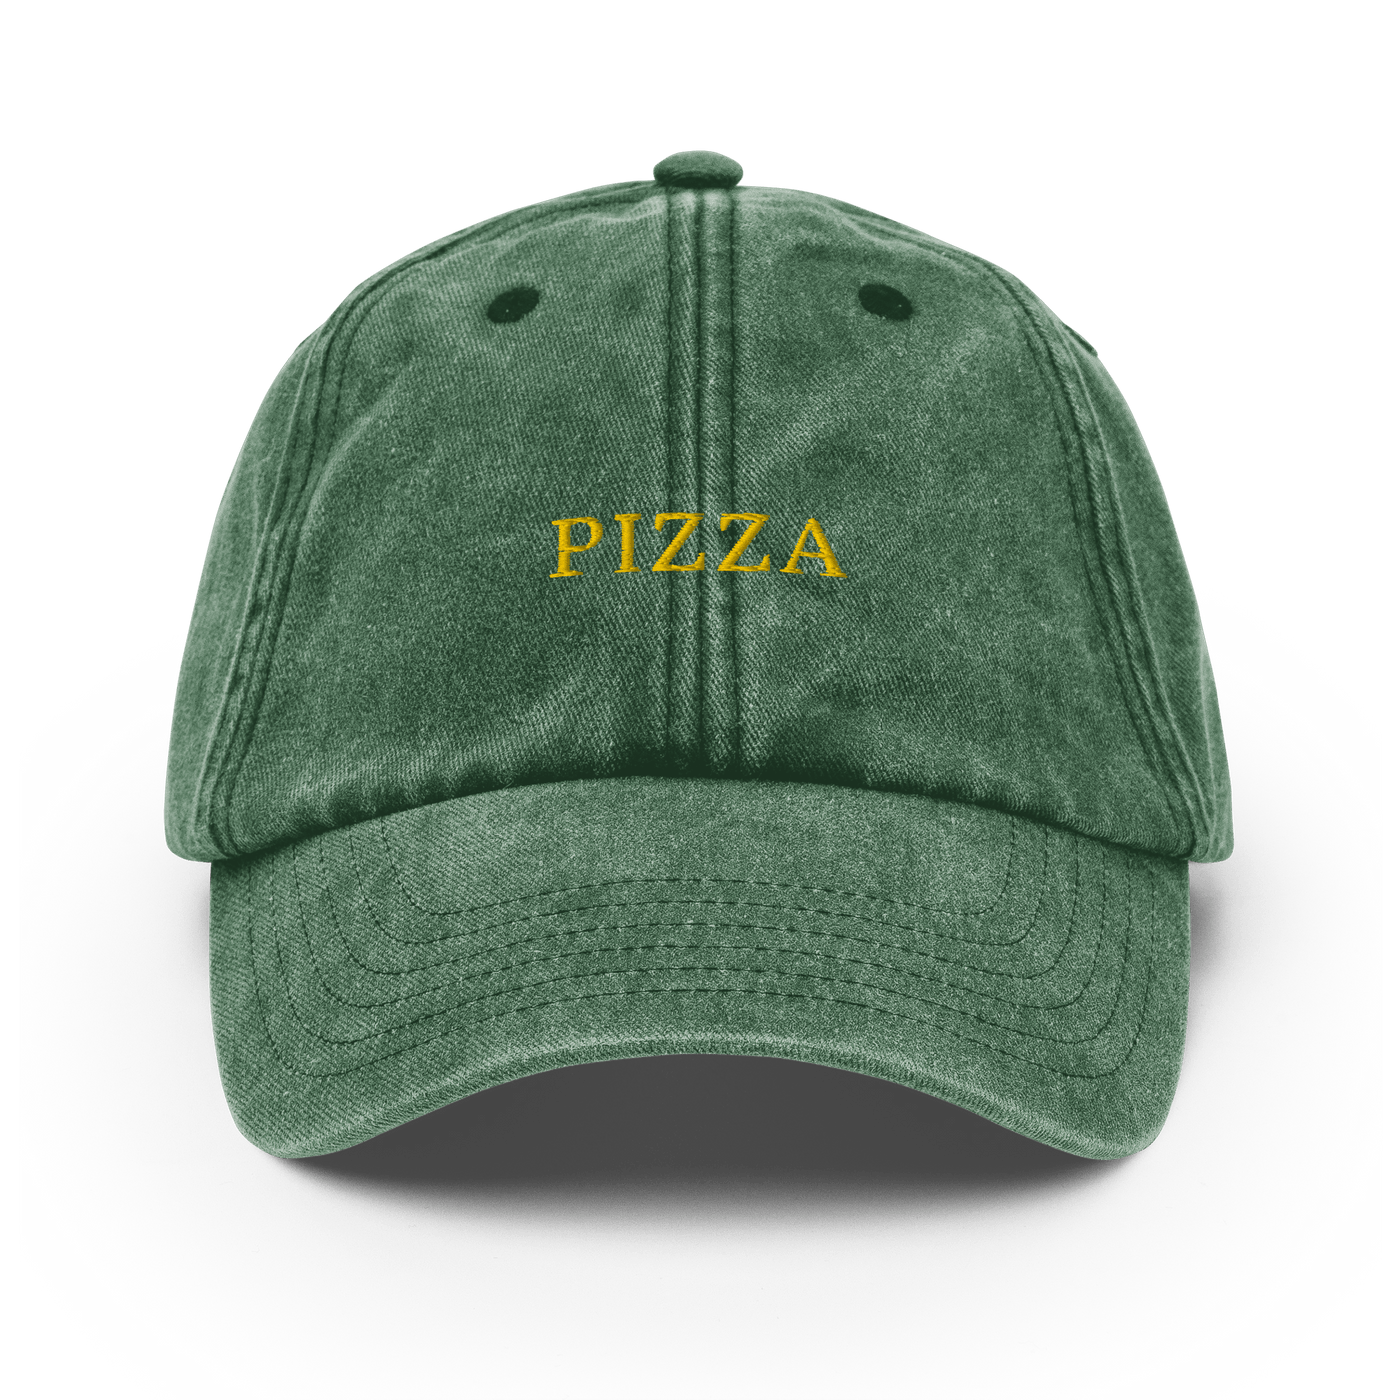 Pizza Vintage Hat - Vintage Bottle Green - - Just Another Cap Store